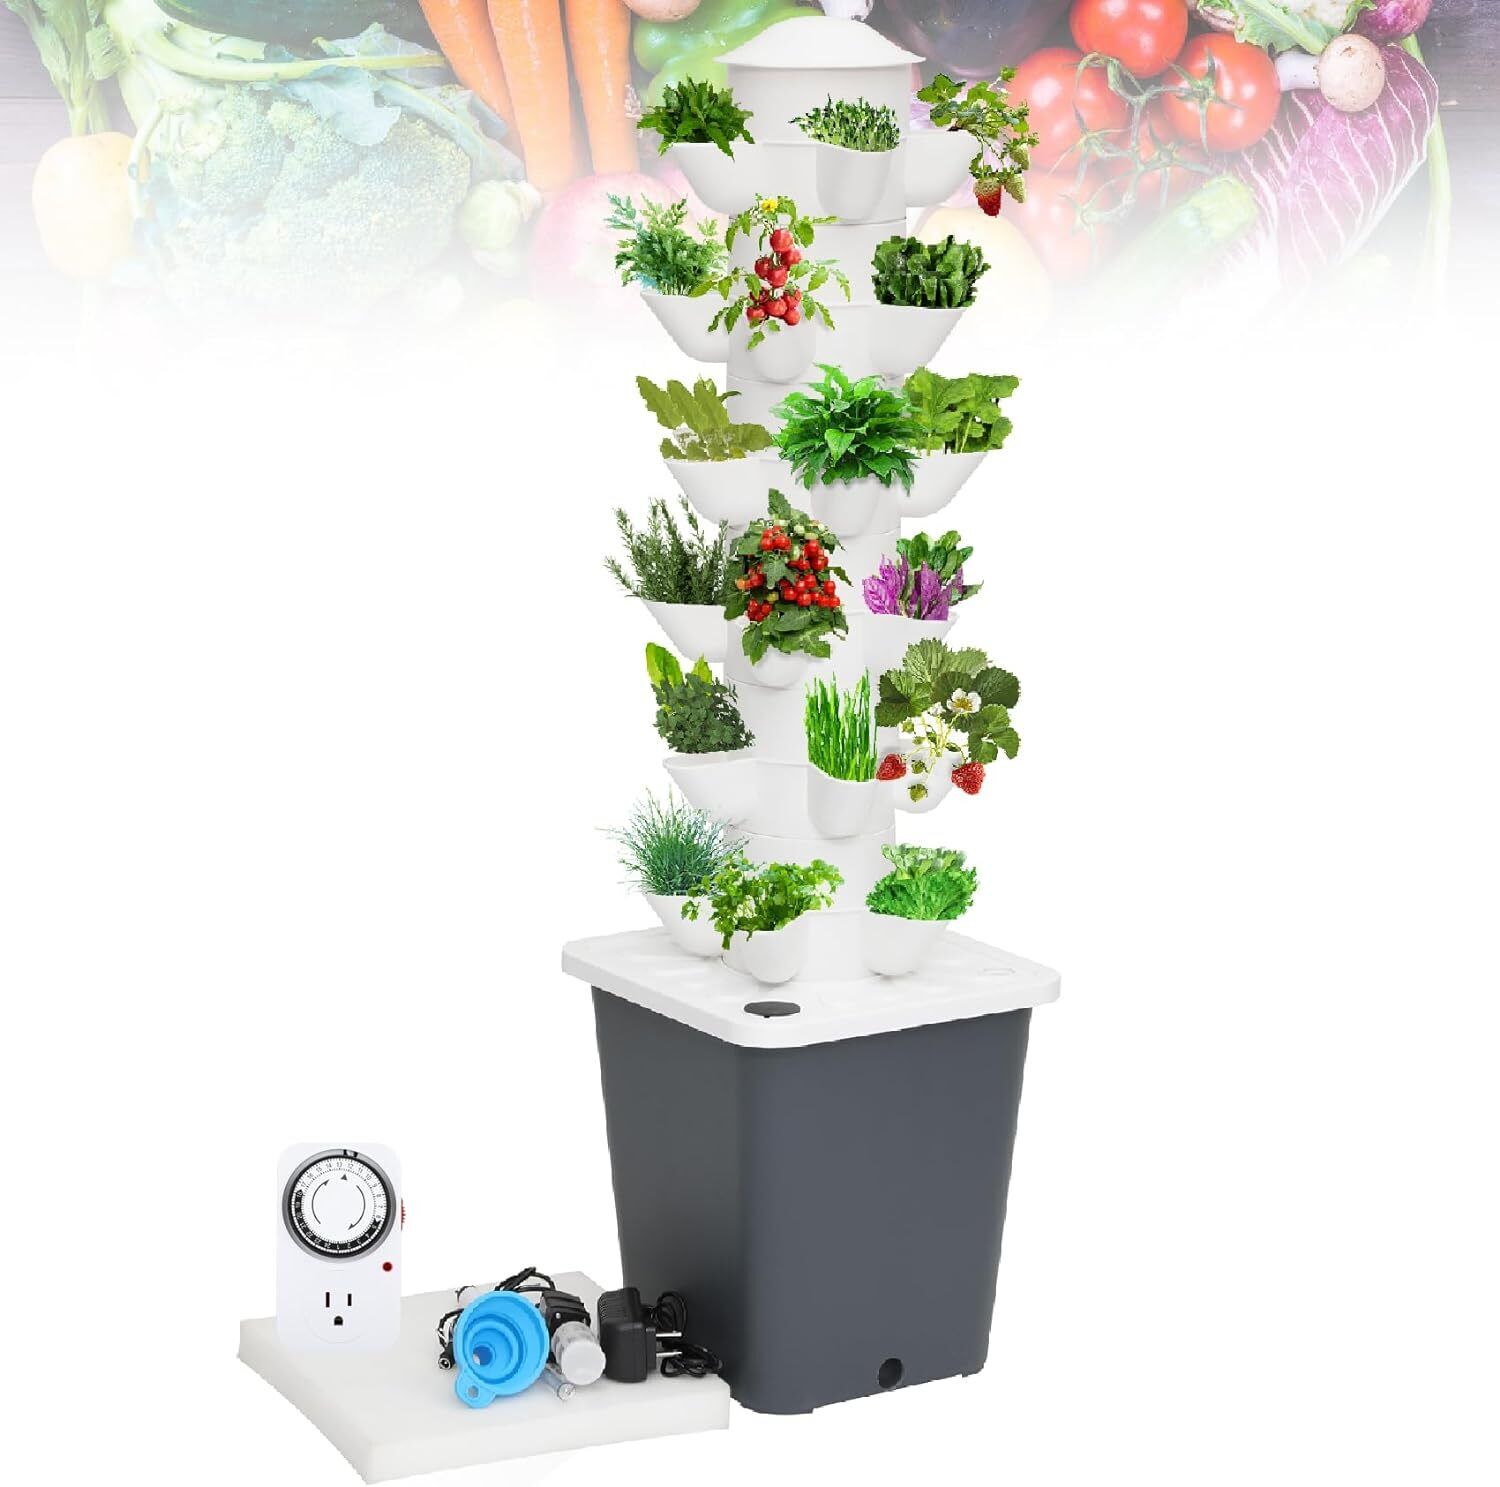 Hydroponic Growing Tower System Garden Indoor Herbs Fruits Vegetables 30 Slots